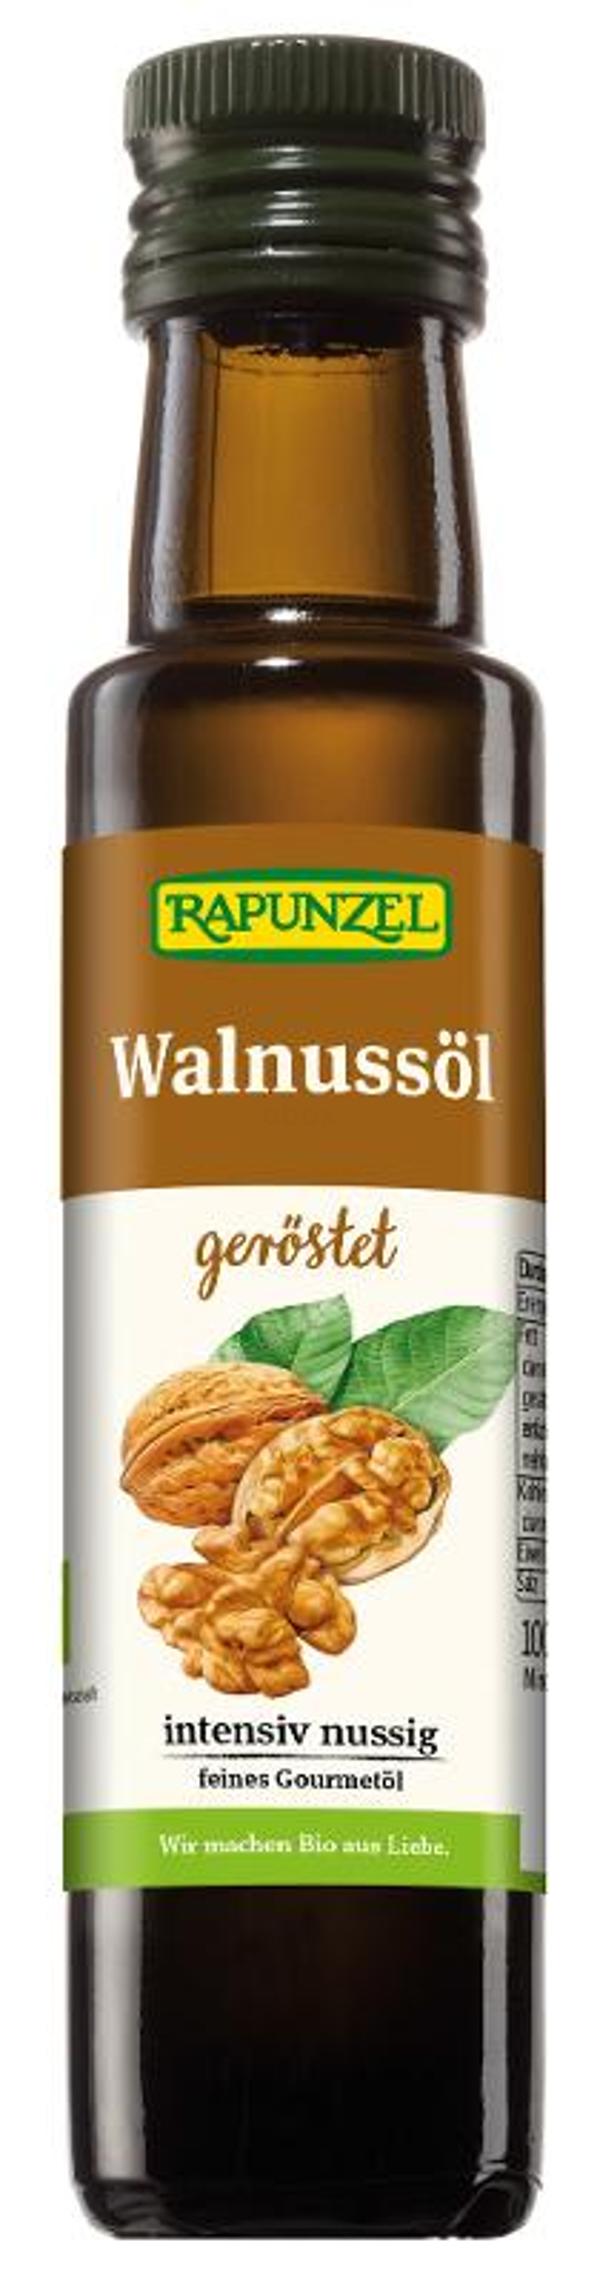 Produktfoto zu Rapunzel Walnussöl geröstet - 100ml